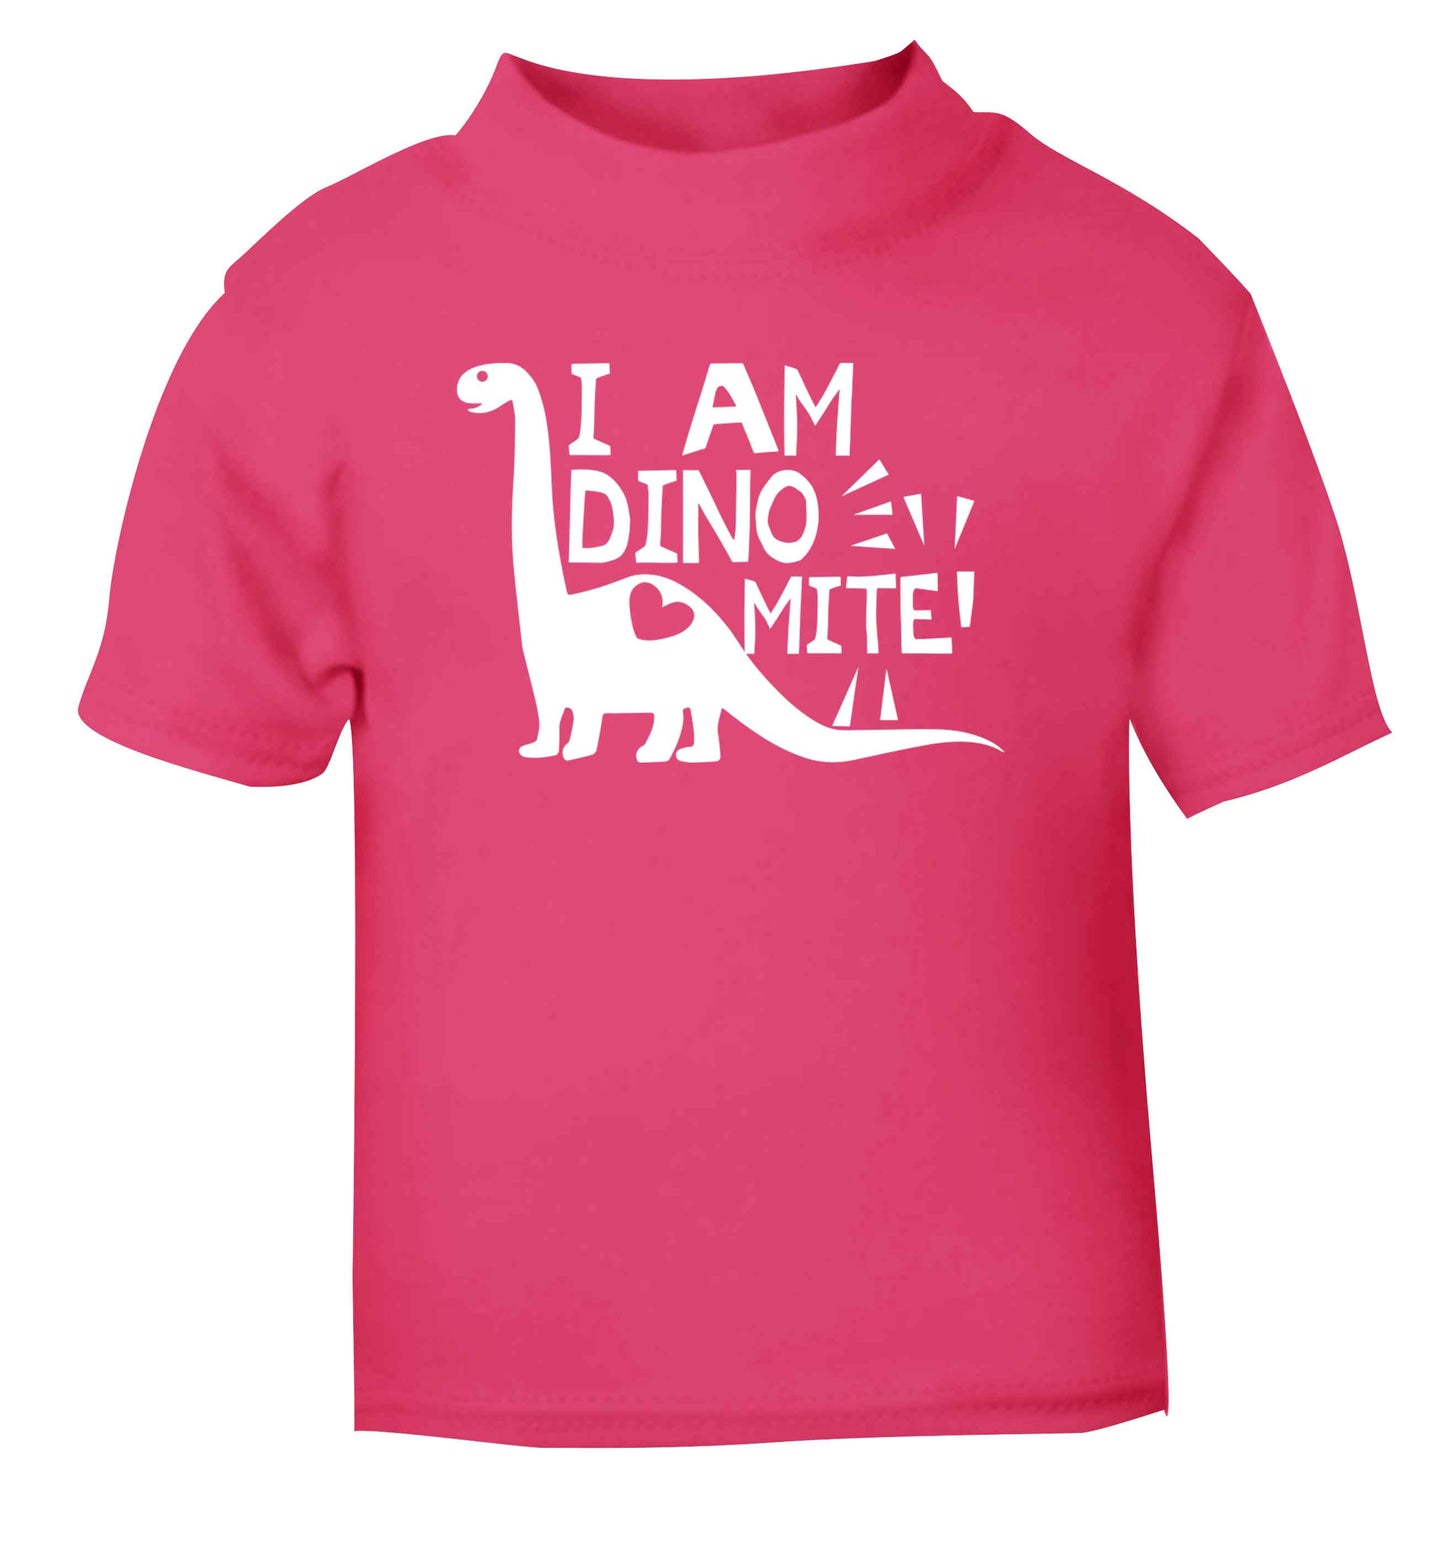 I am dinomite! pink Baby Toddler Tshirt 2 Years